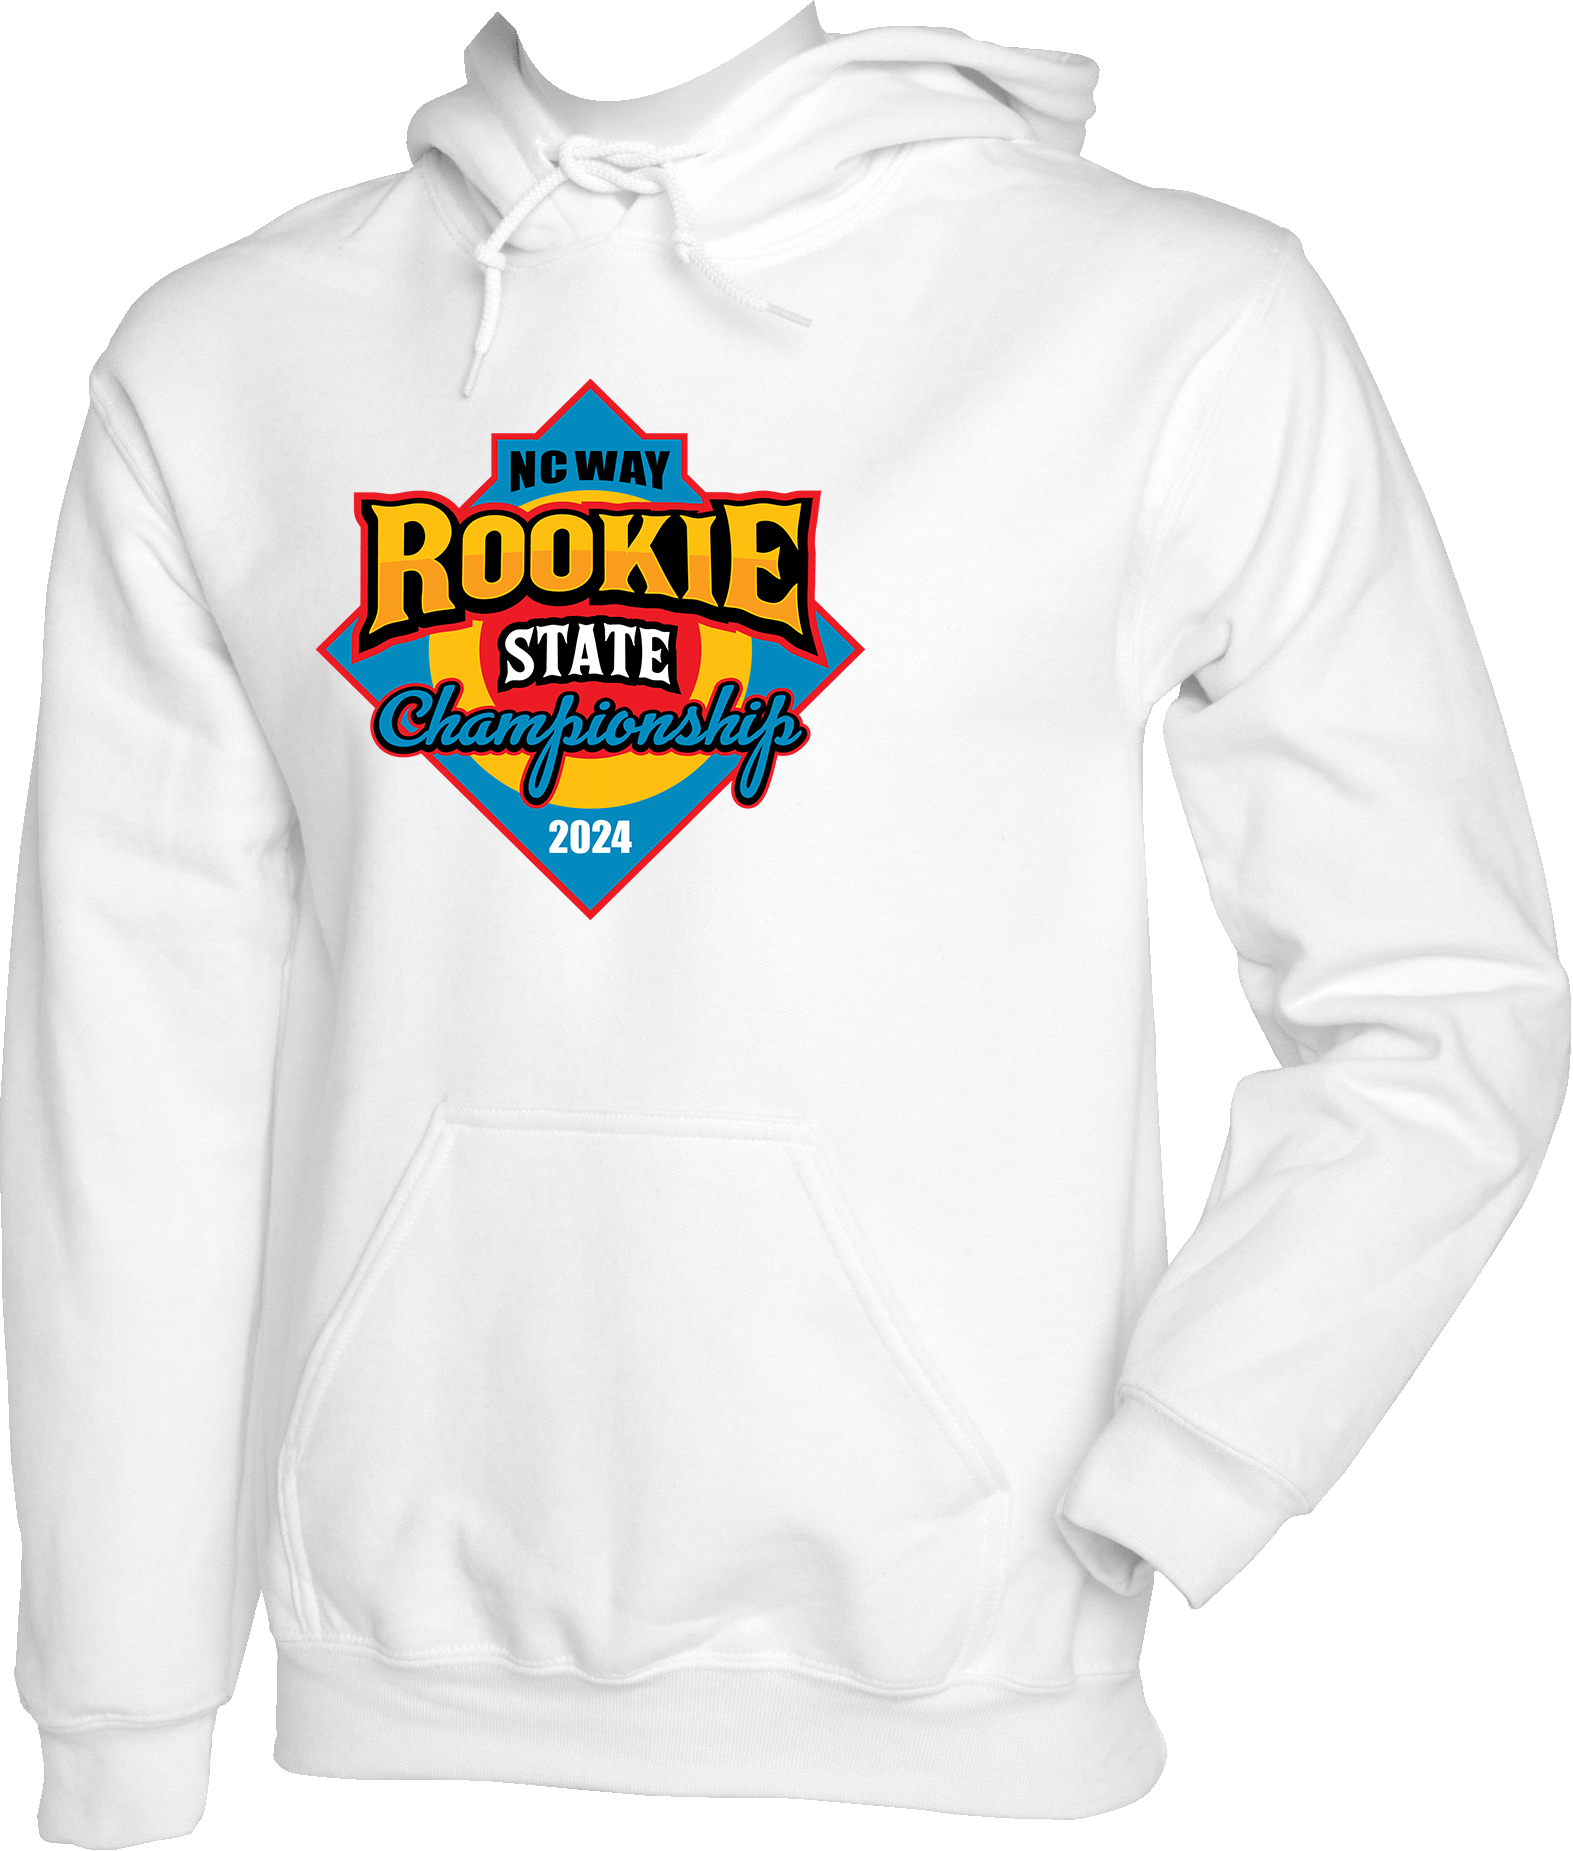 Hoodies - 2024 NCWAY Rookie State Championship